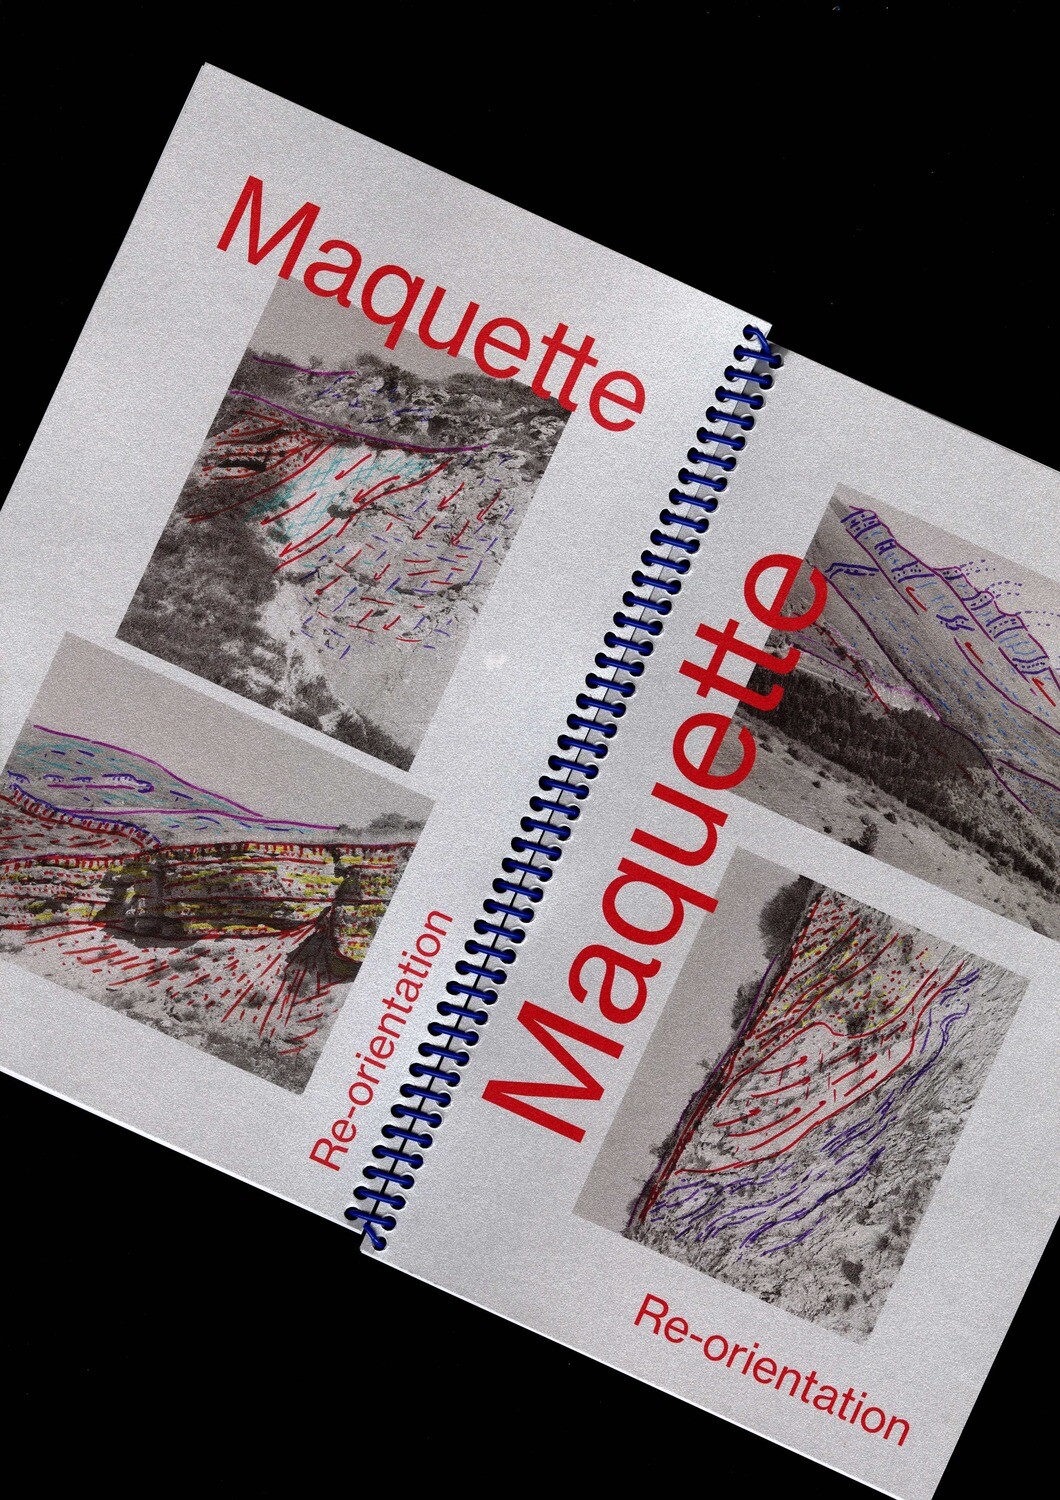 Maquette Issue 2: Re-orientation